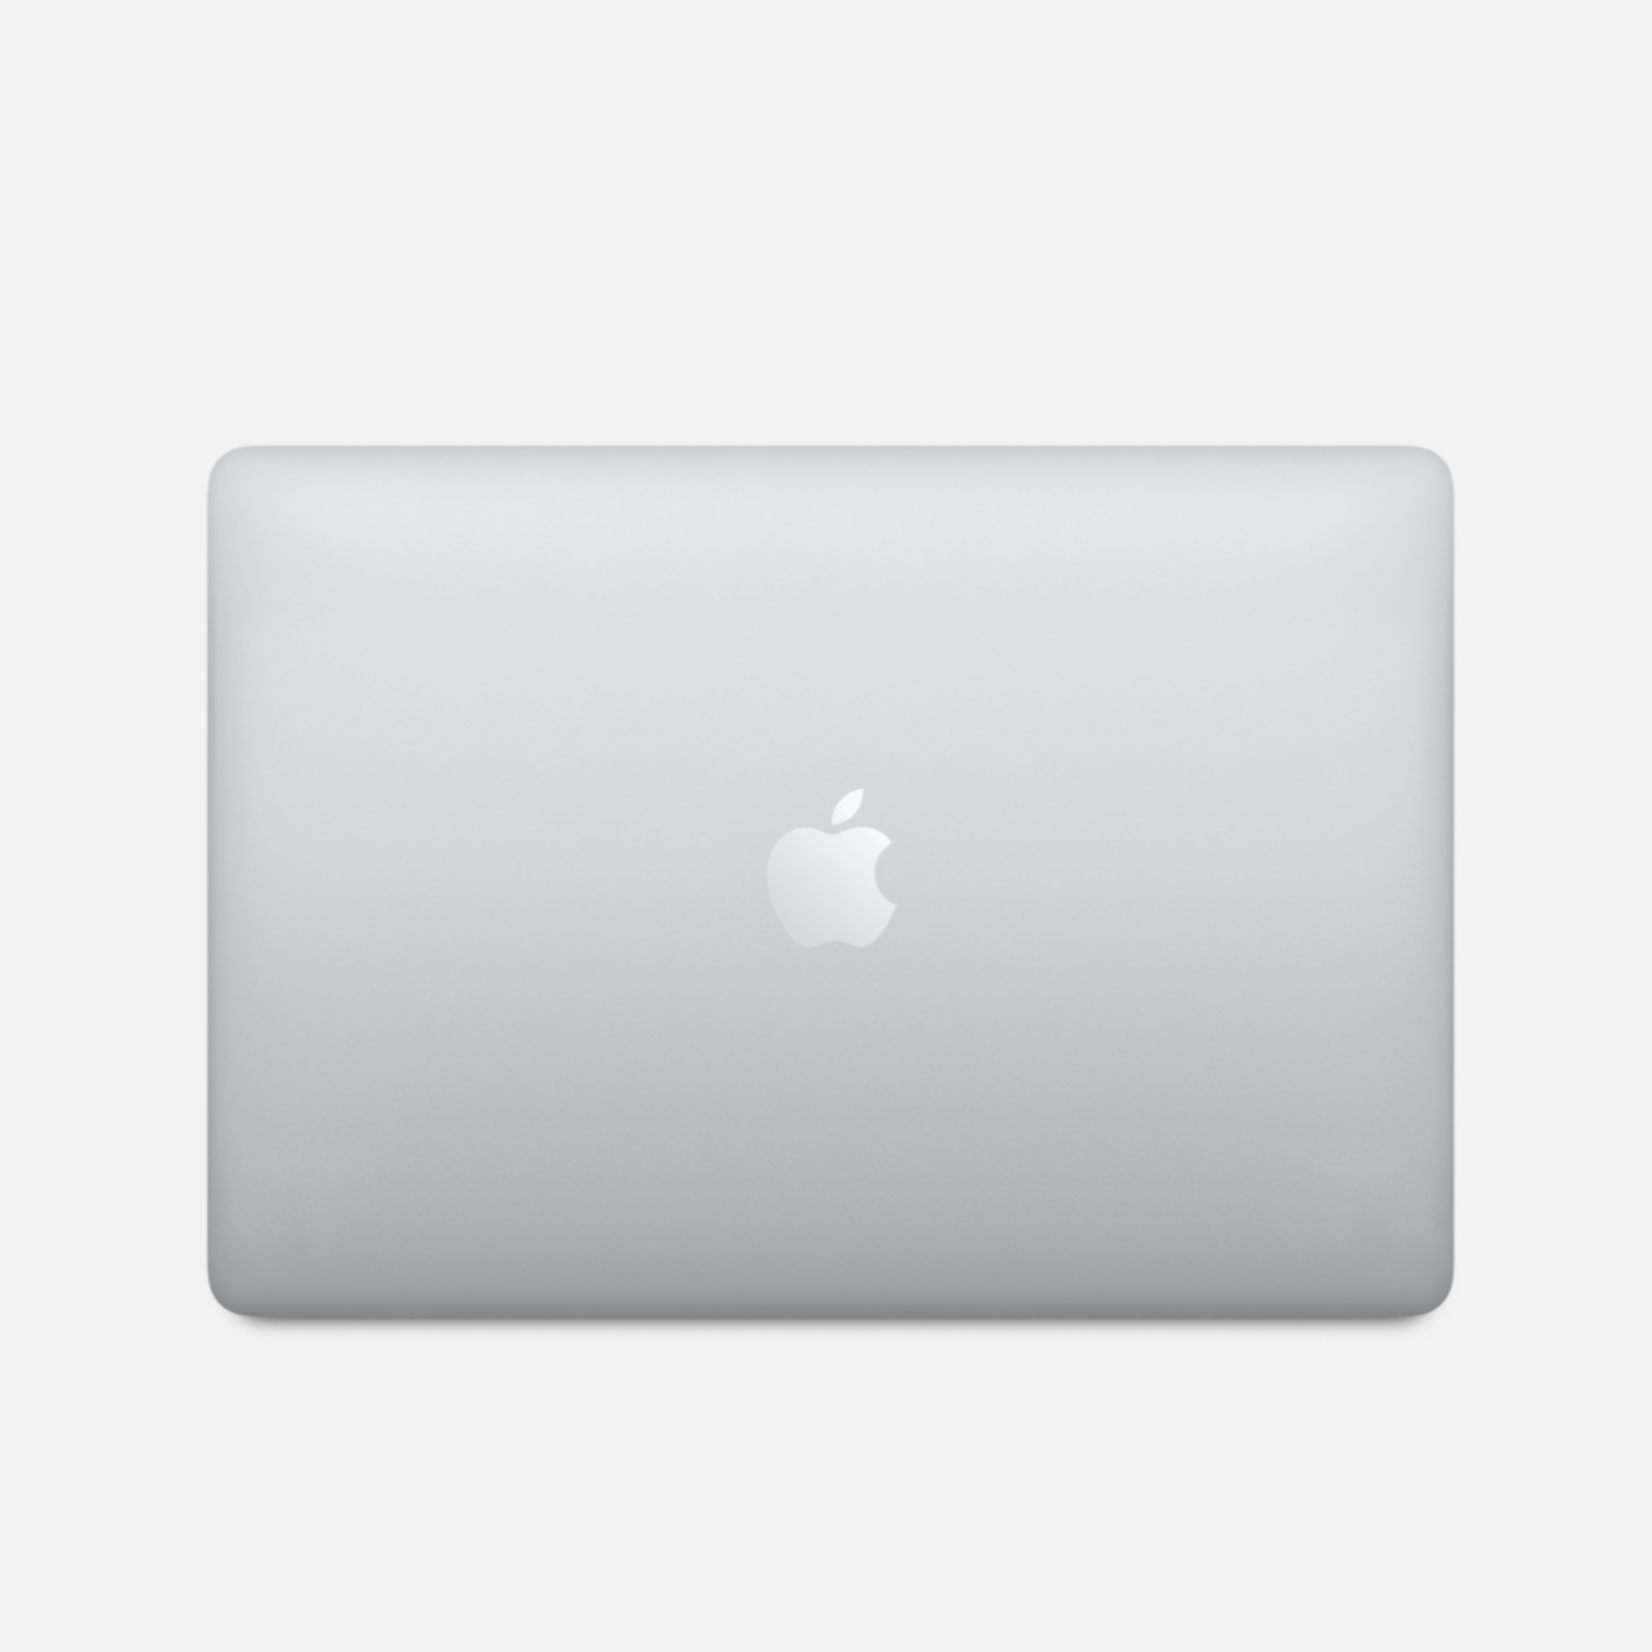 Apple MacBook Pro 13-inch 256GB Silver